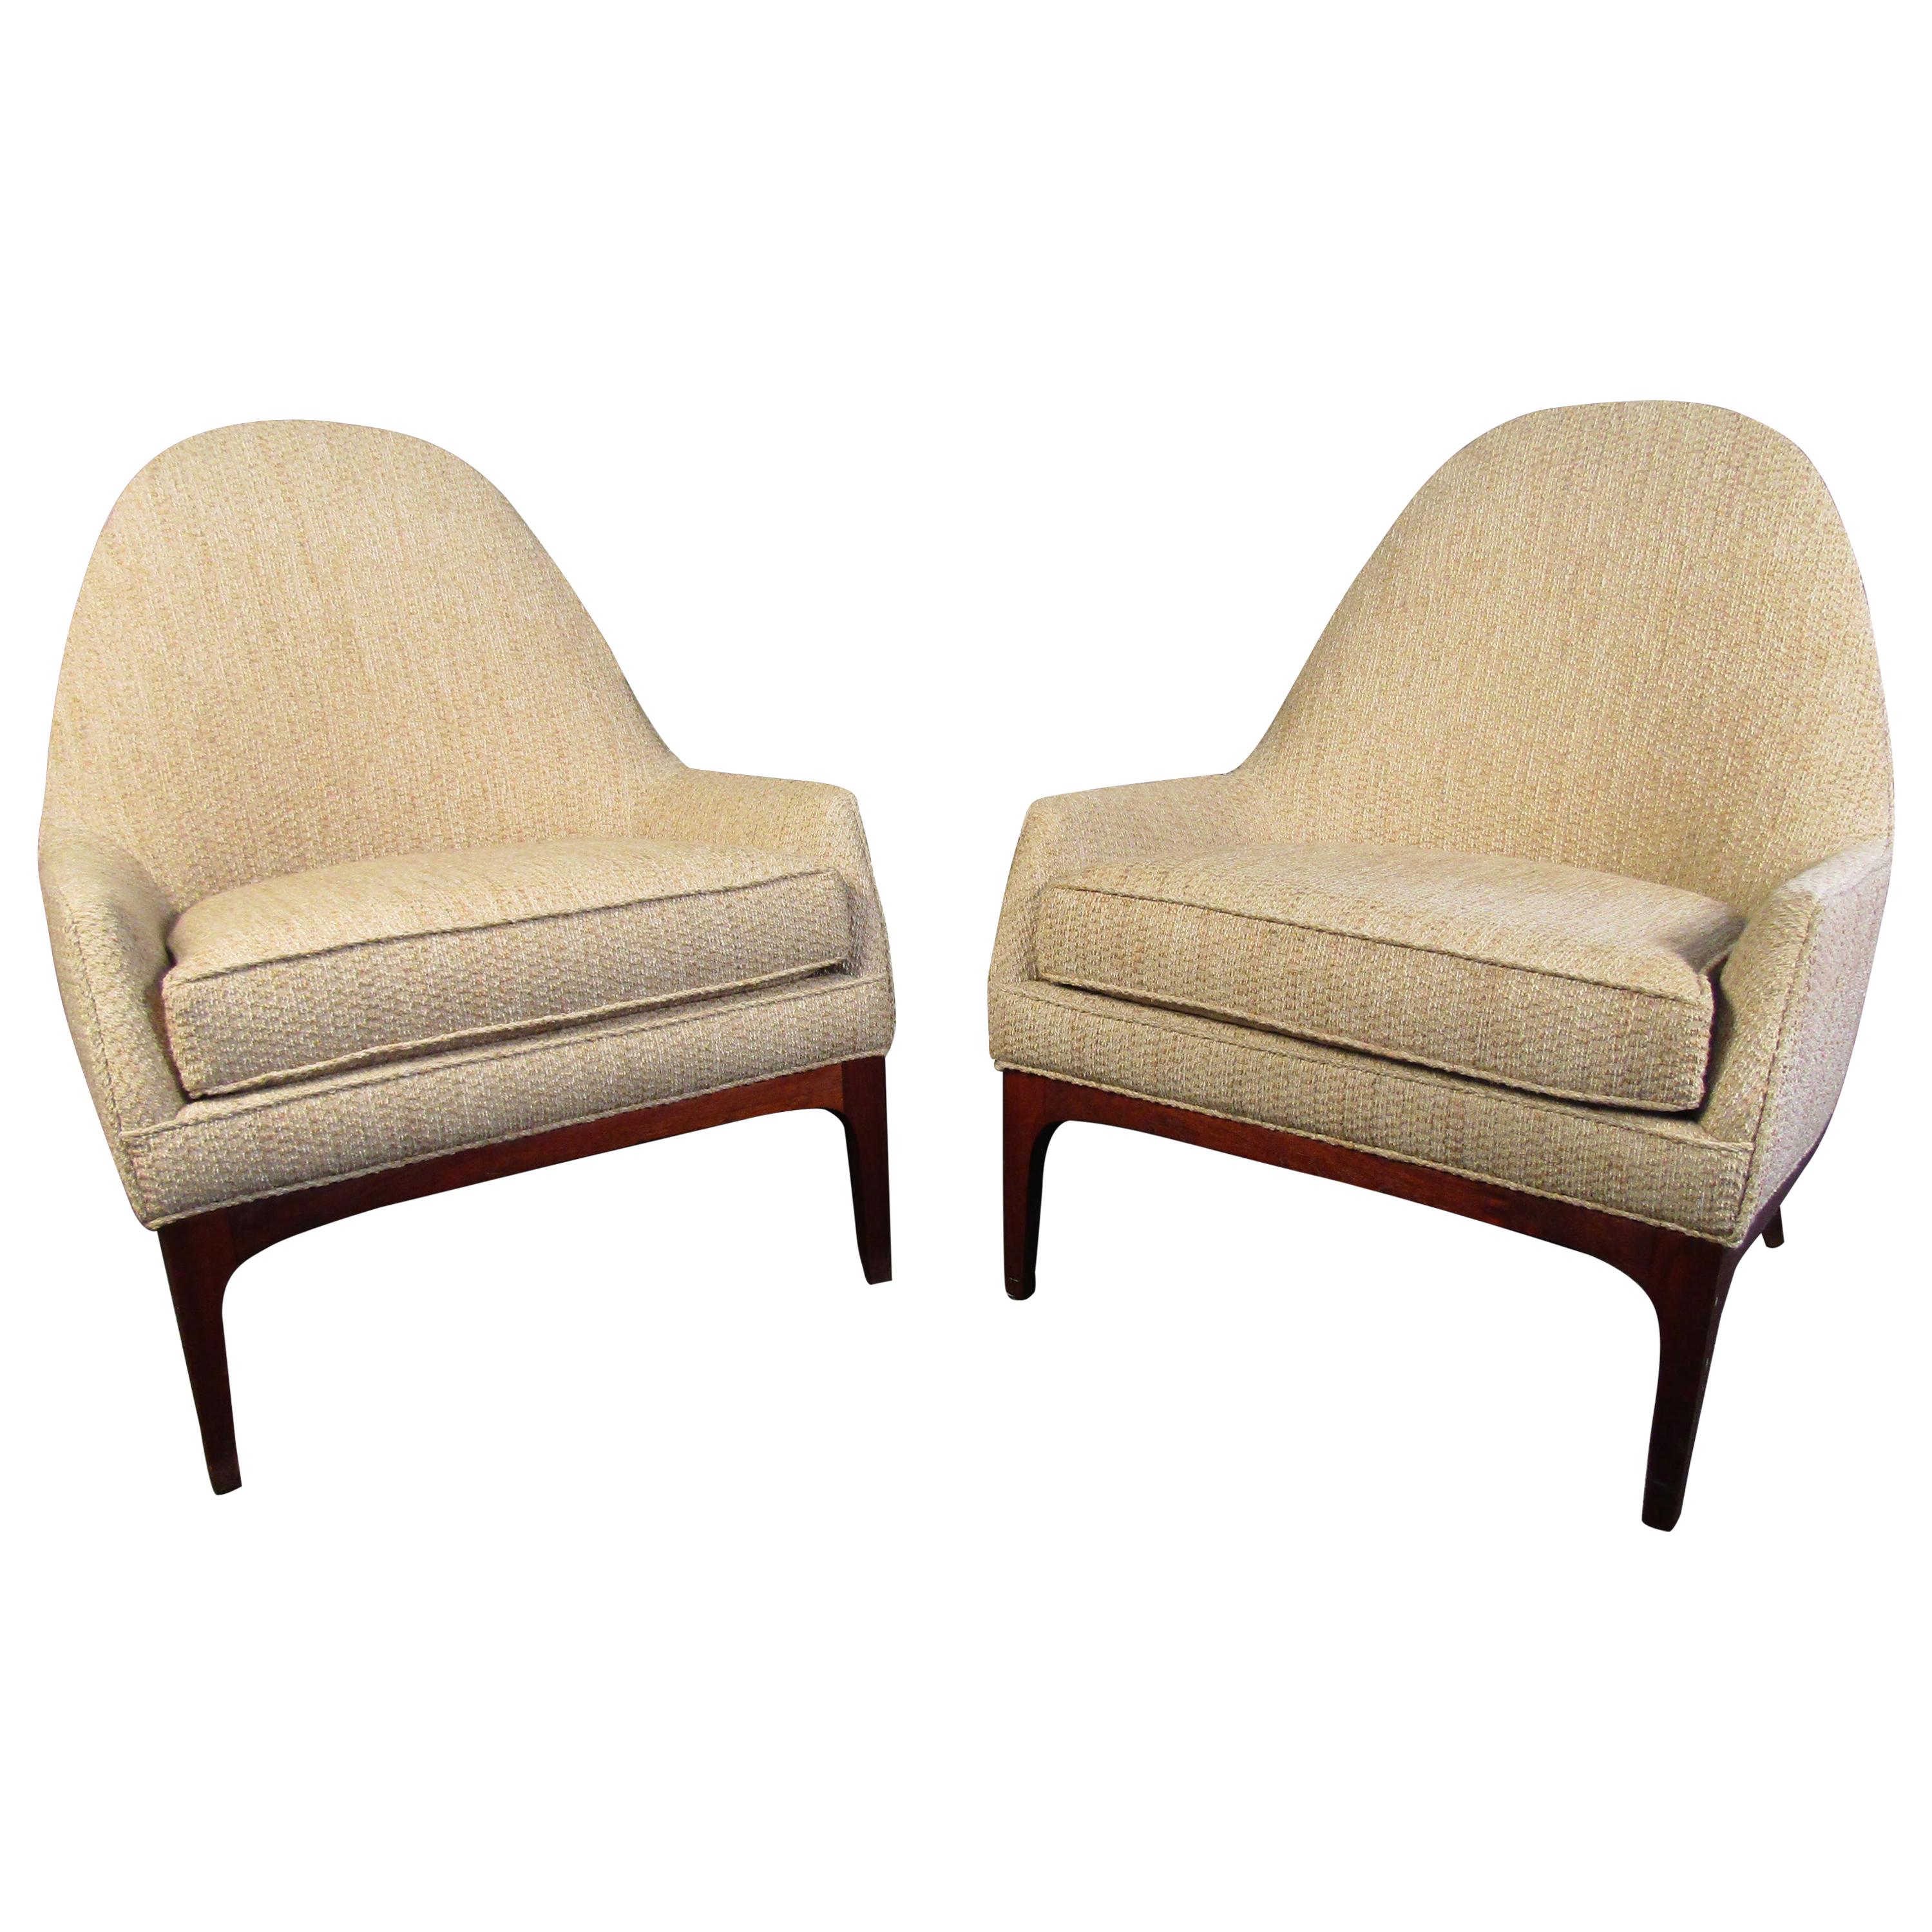 Pair of Elegant Mid-Century Modern Reading Chairs